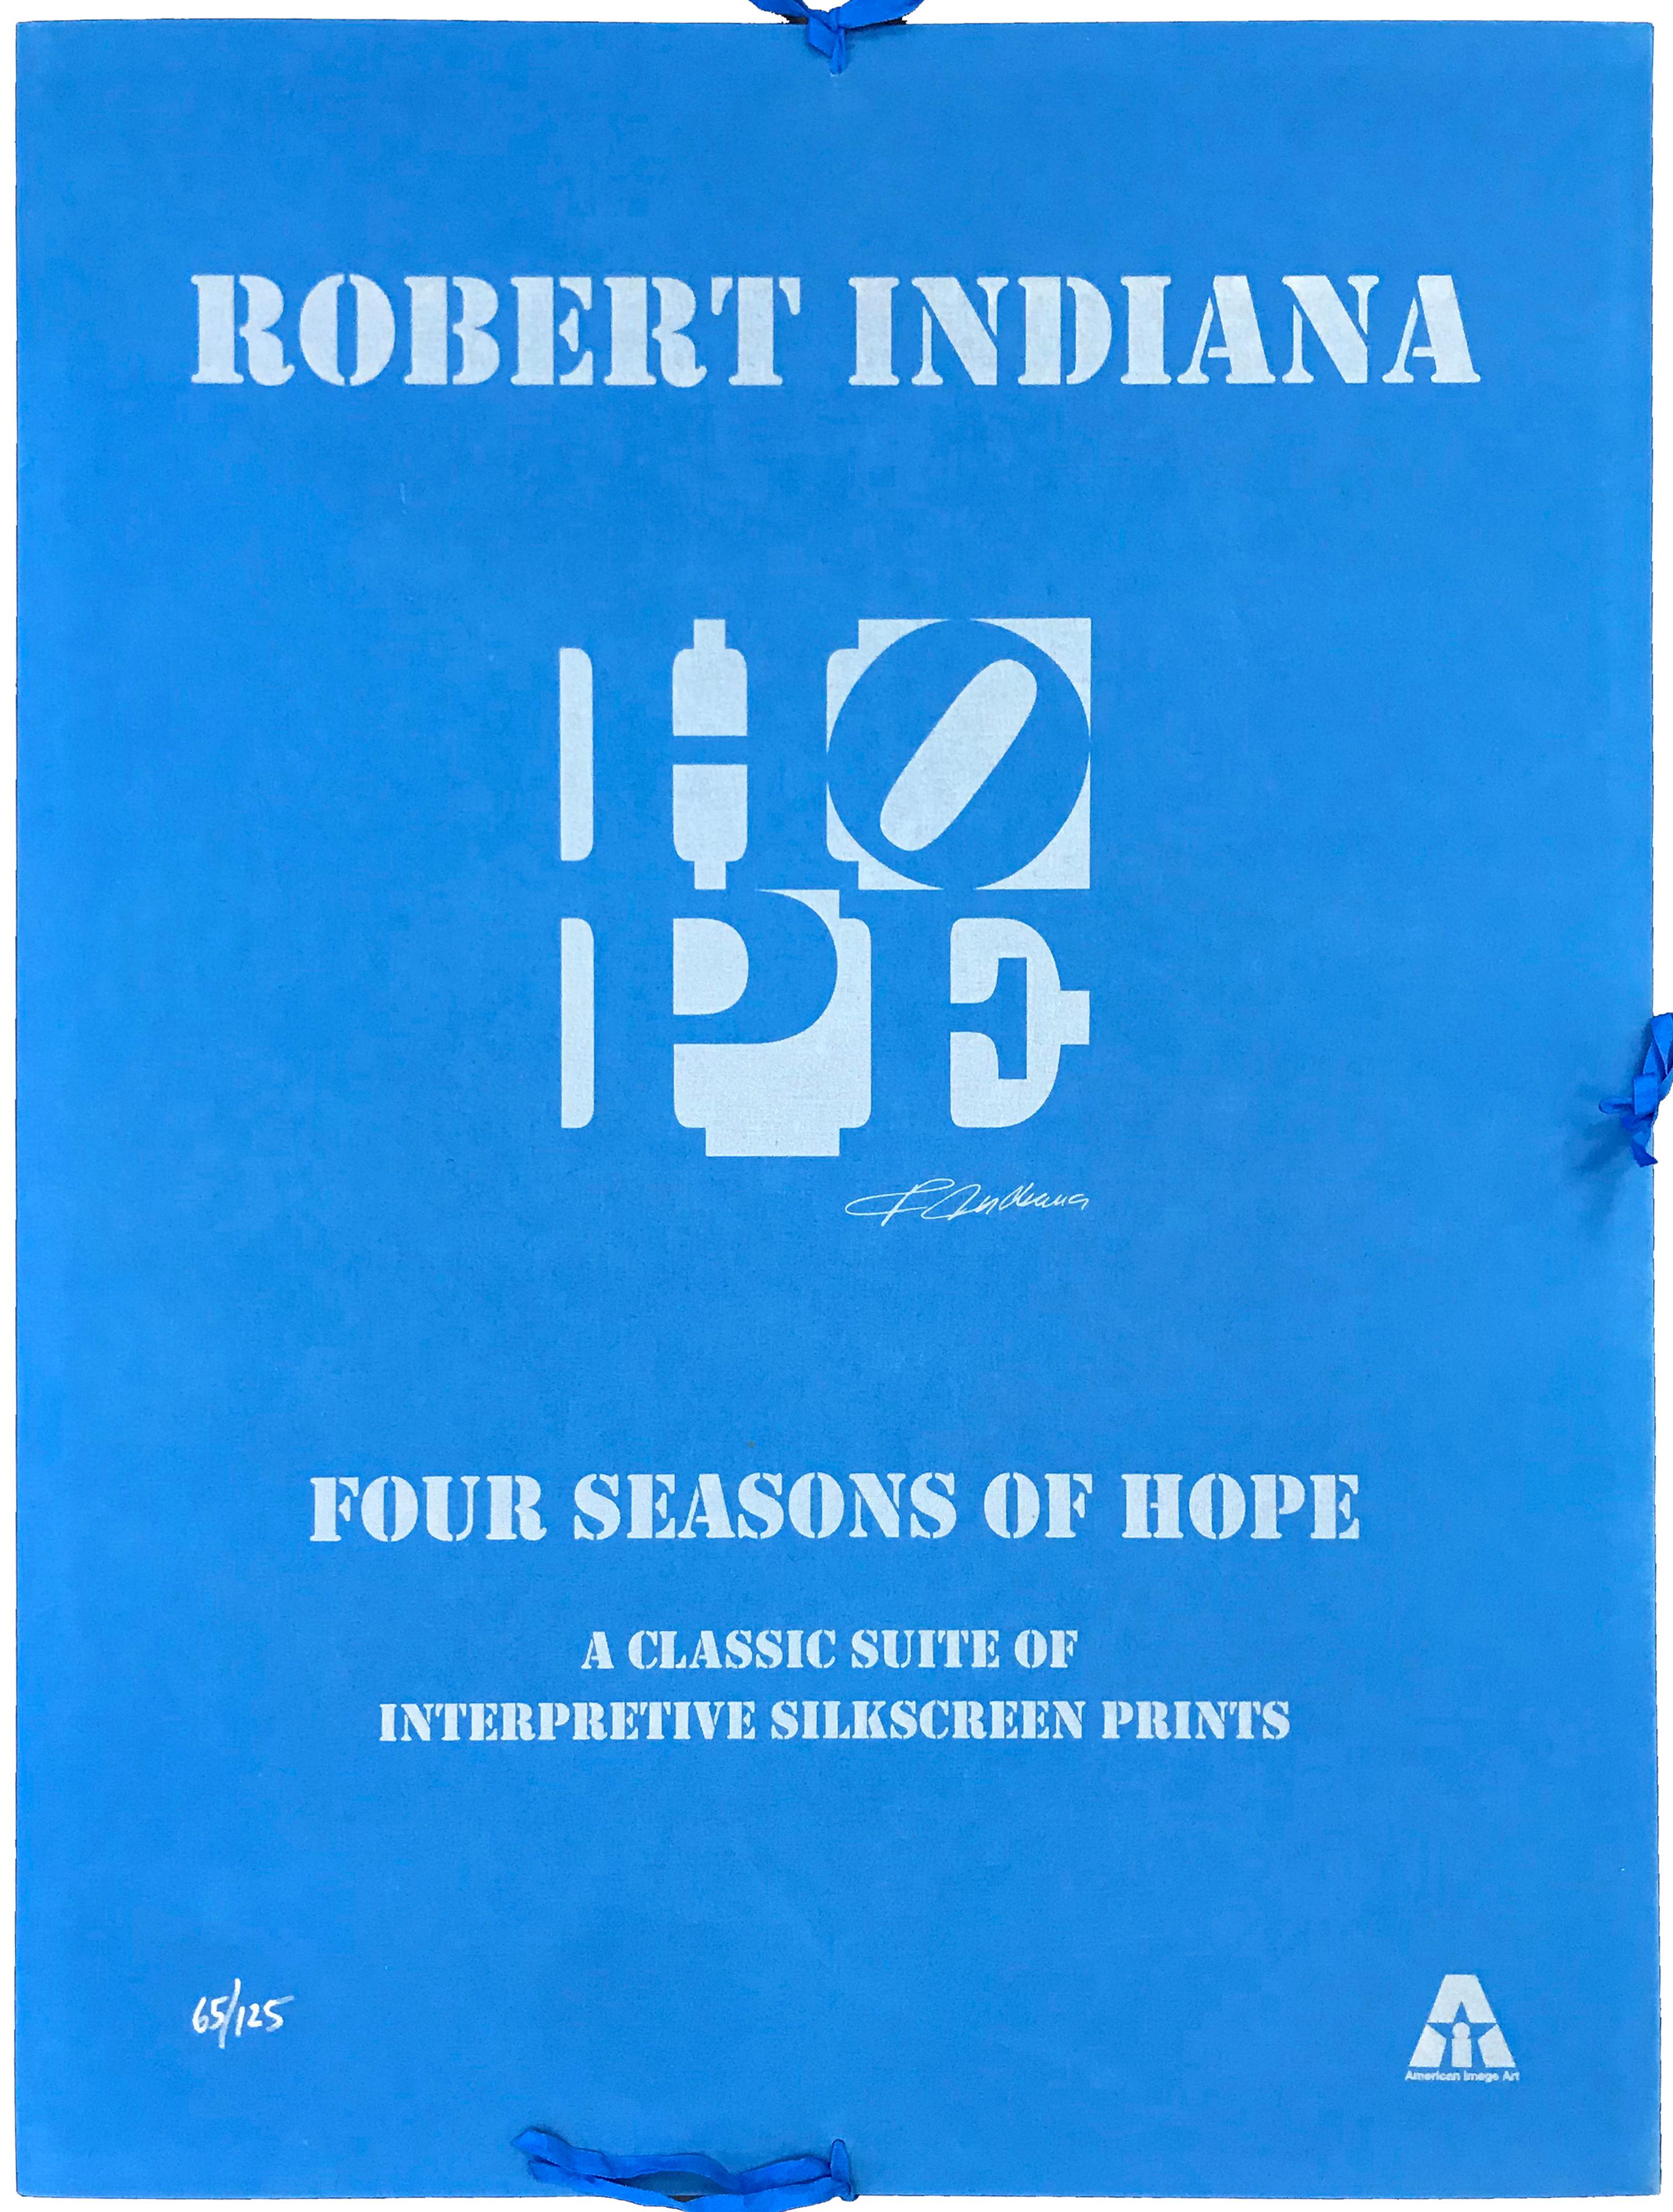 FOUR SEASONS OF HOPE PORTFOLIO (SILVER) - Print by Robert Indiana